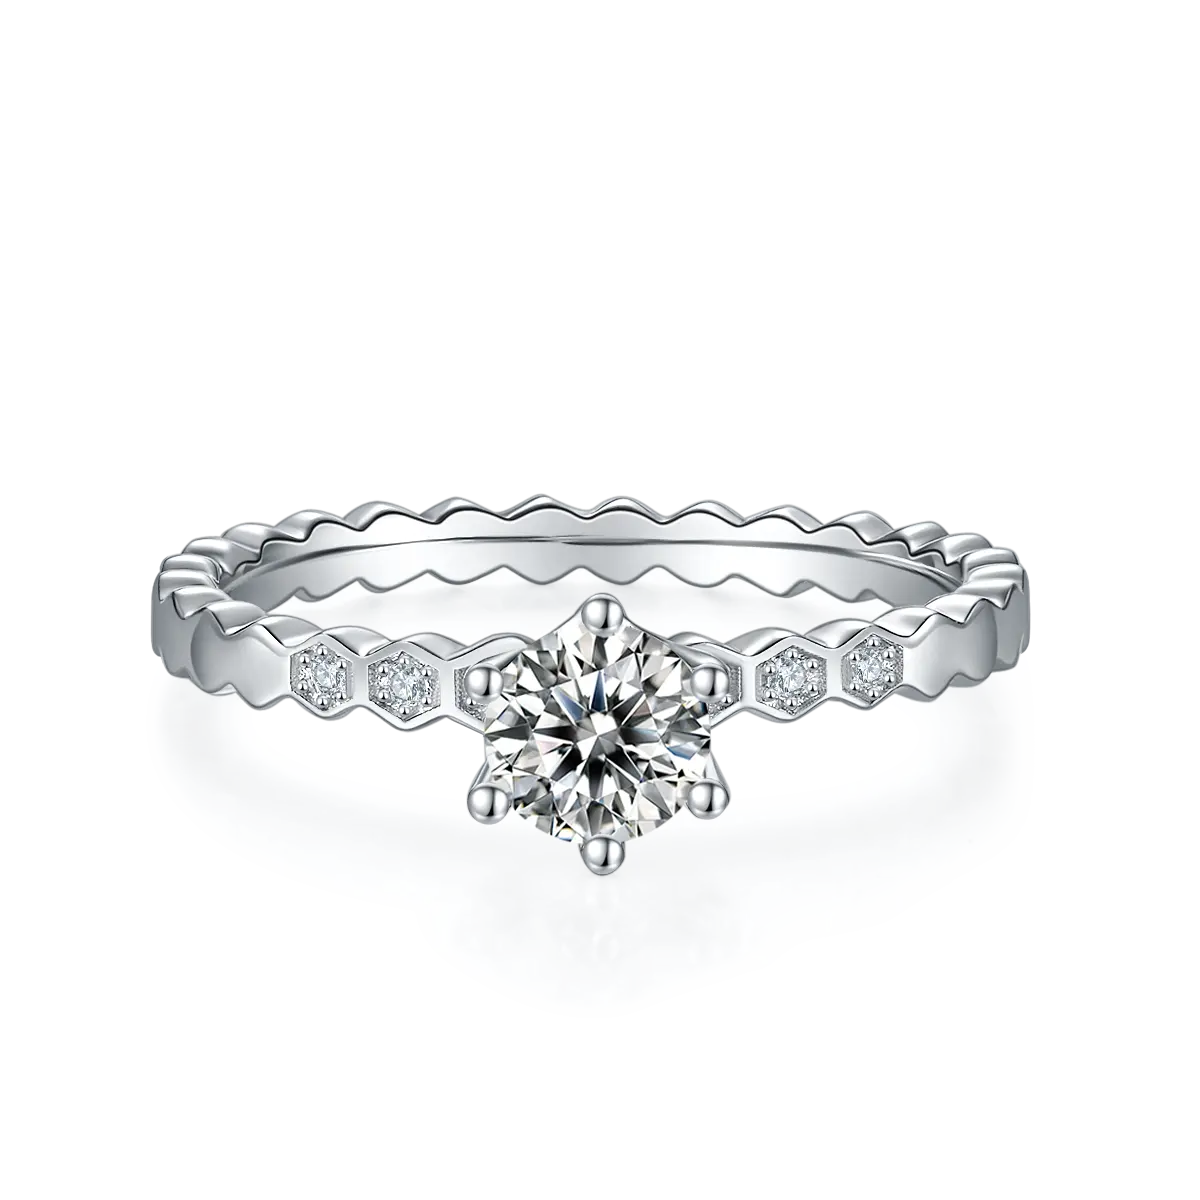 Sgarit joias unissex, joias redondas e brilhantes para casamento, corte 0.5ct 2022, joias personalizadas de moissanite, 925